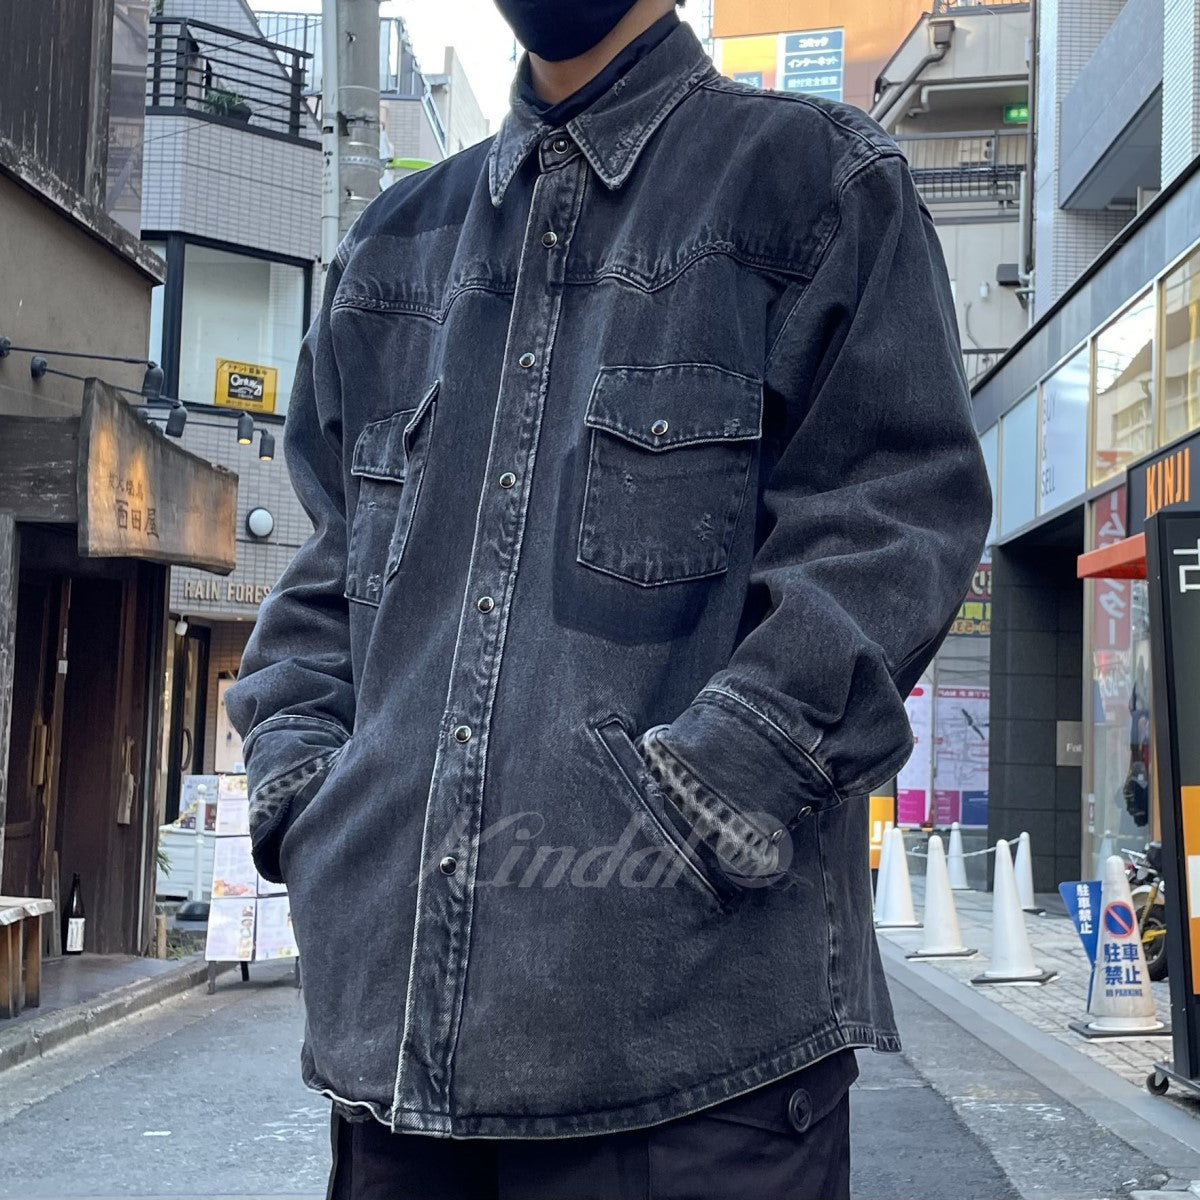 MIYAGIHIDETAKA(ミヤギヒデタカ) 20AW Black denim shirt Jacket再構築 